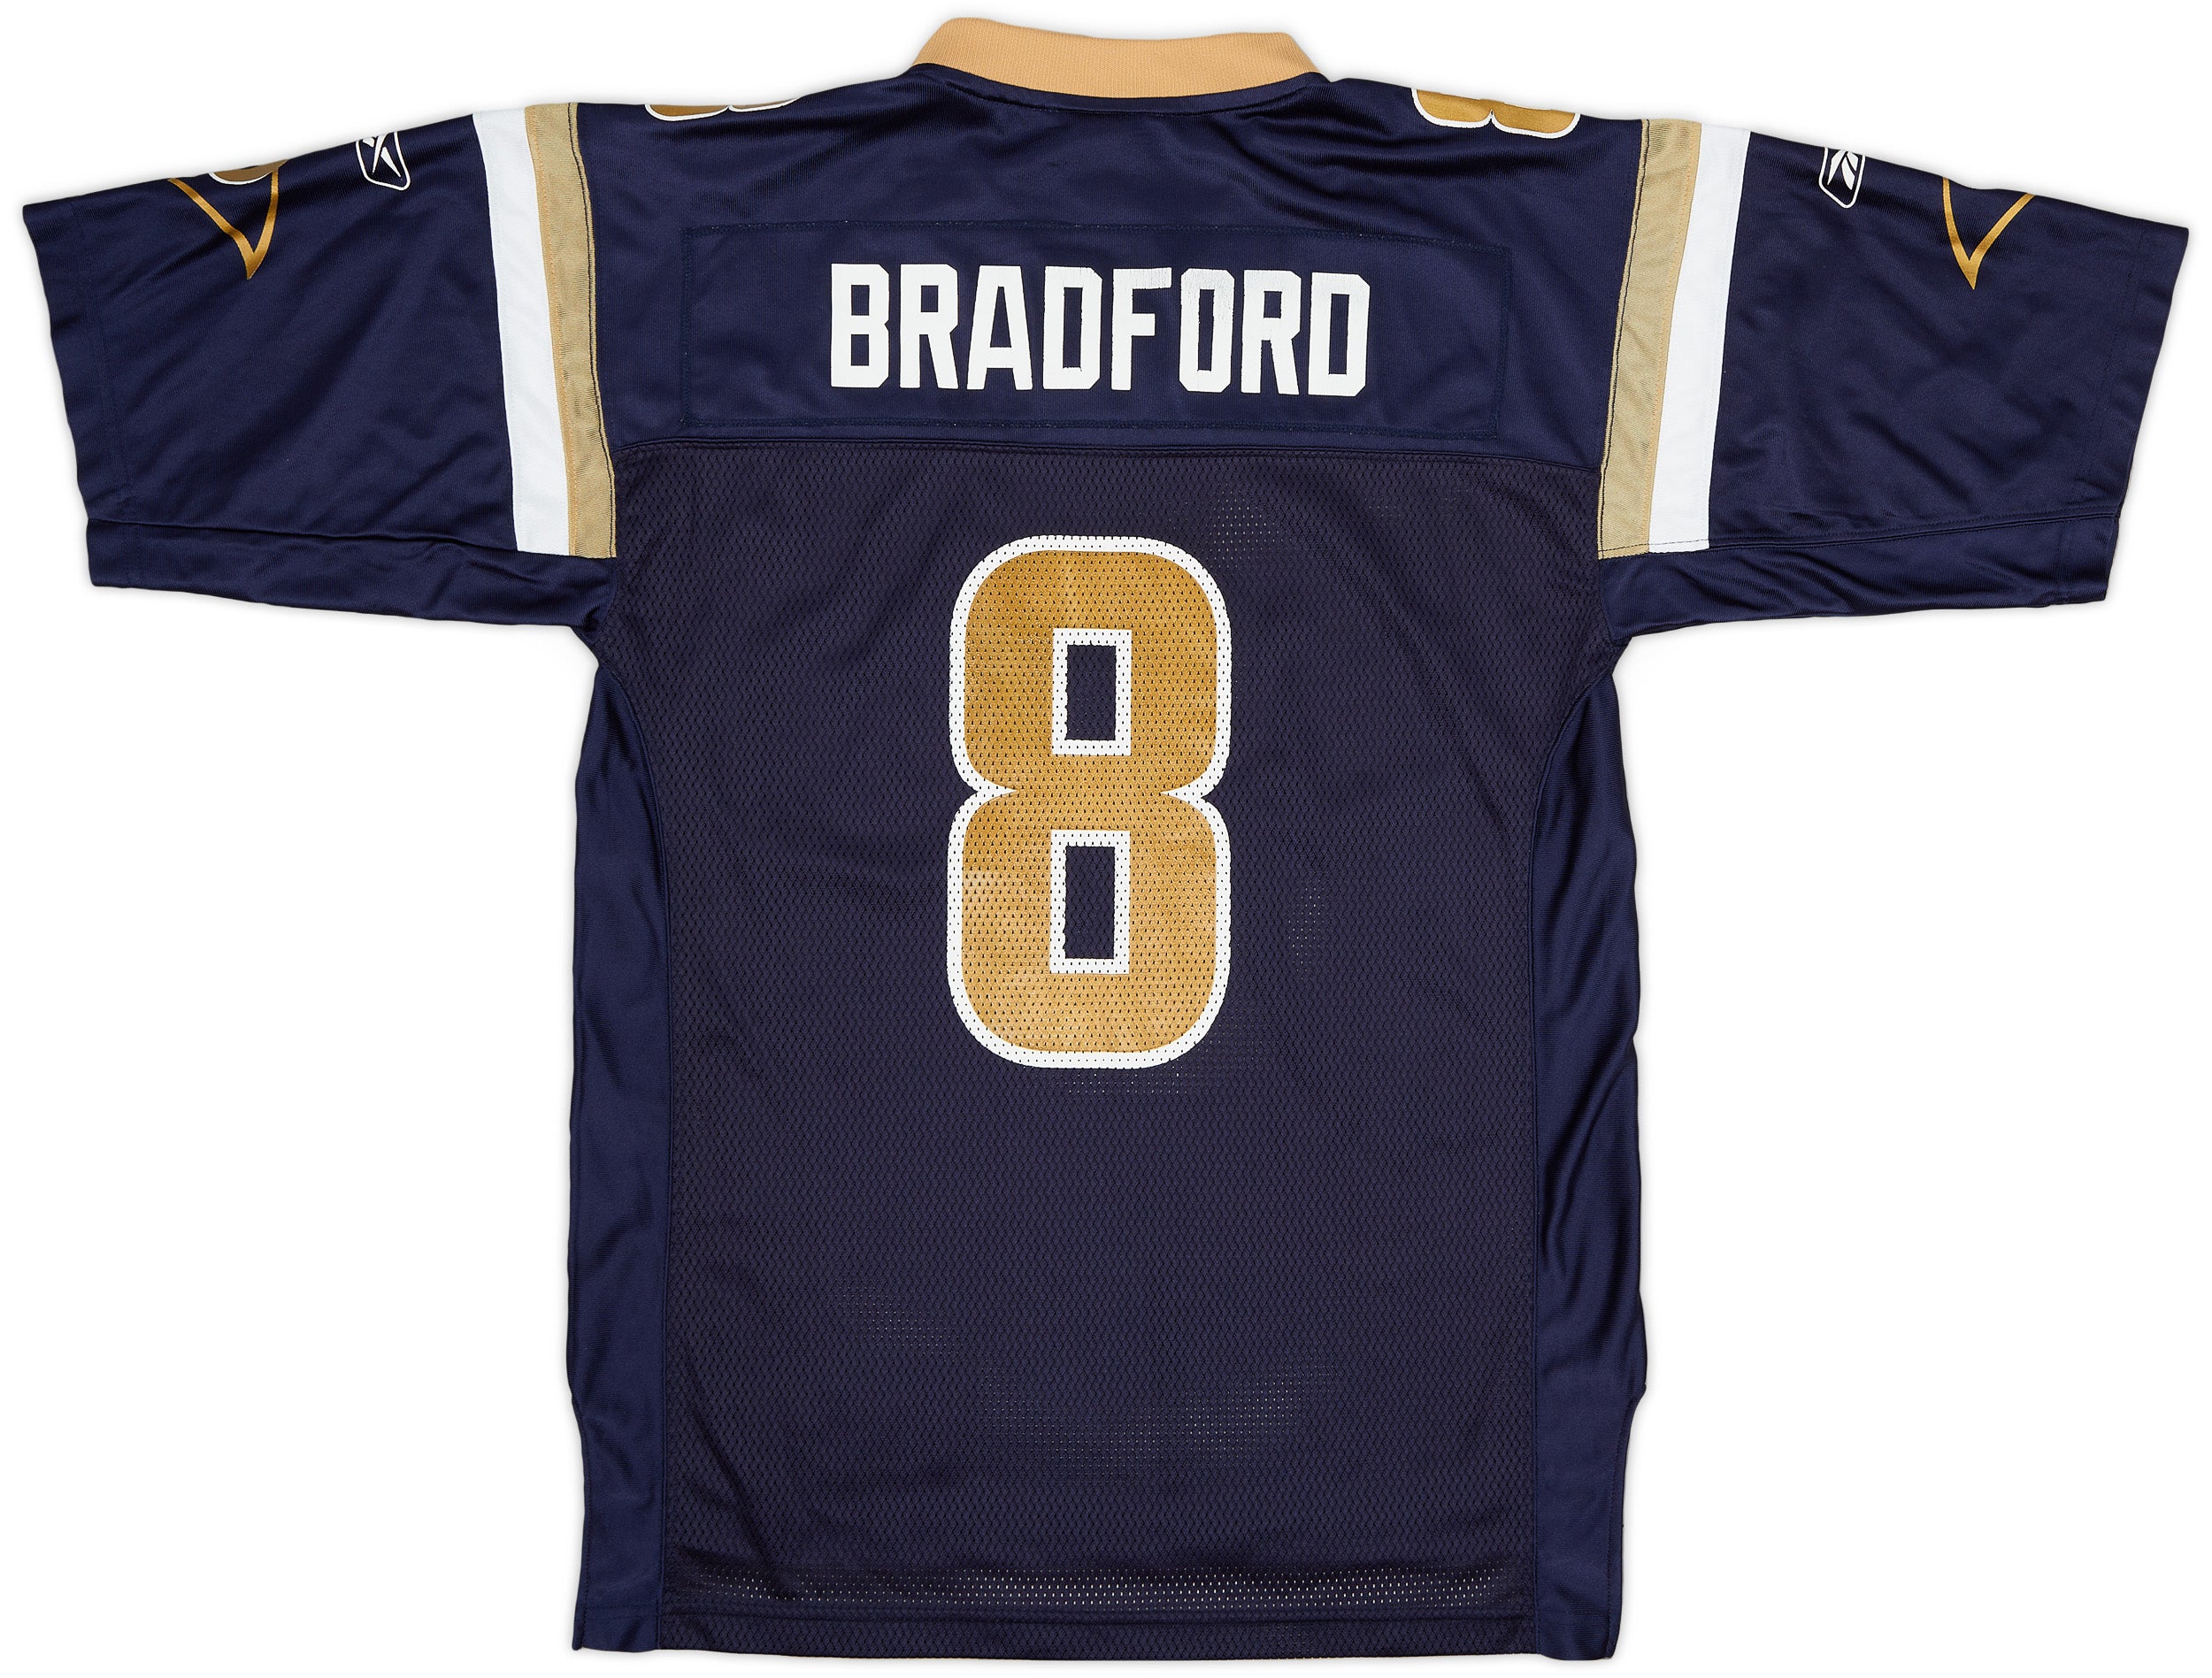 Bradford Anthony replica jersey